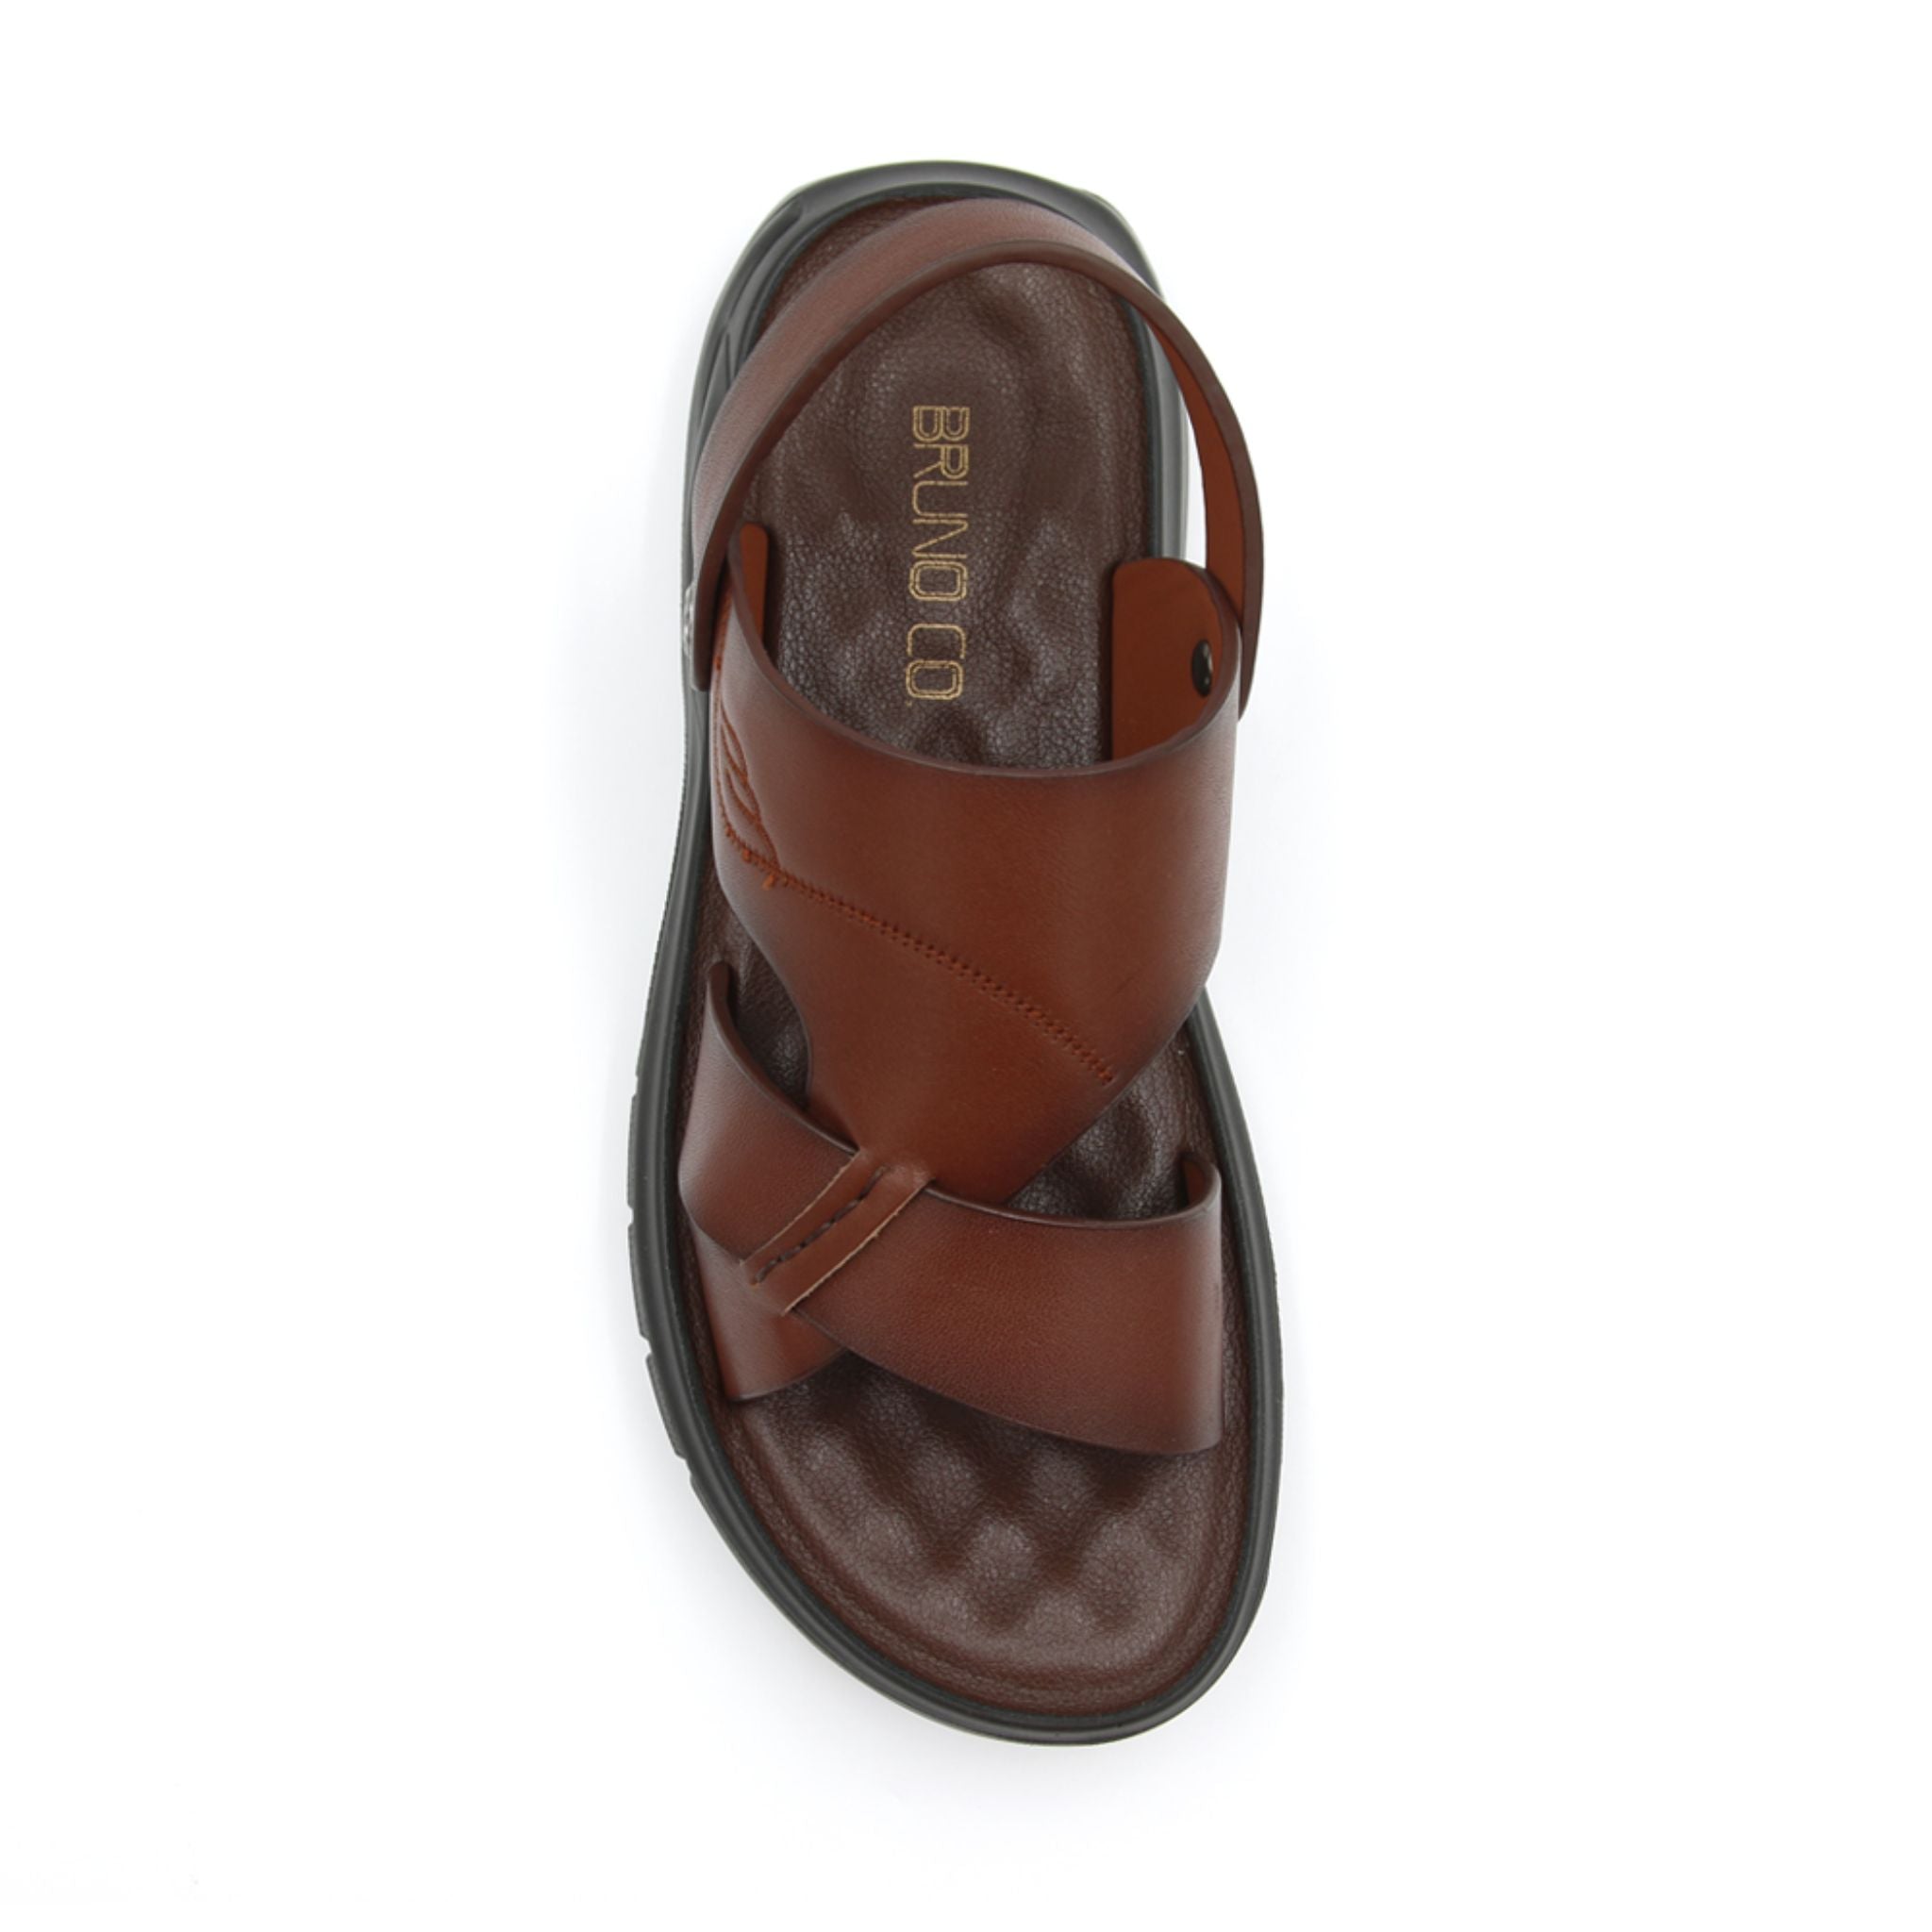 Bruno Co. Kiki Leather Sandals - Brown